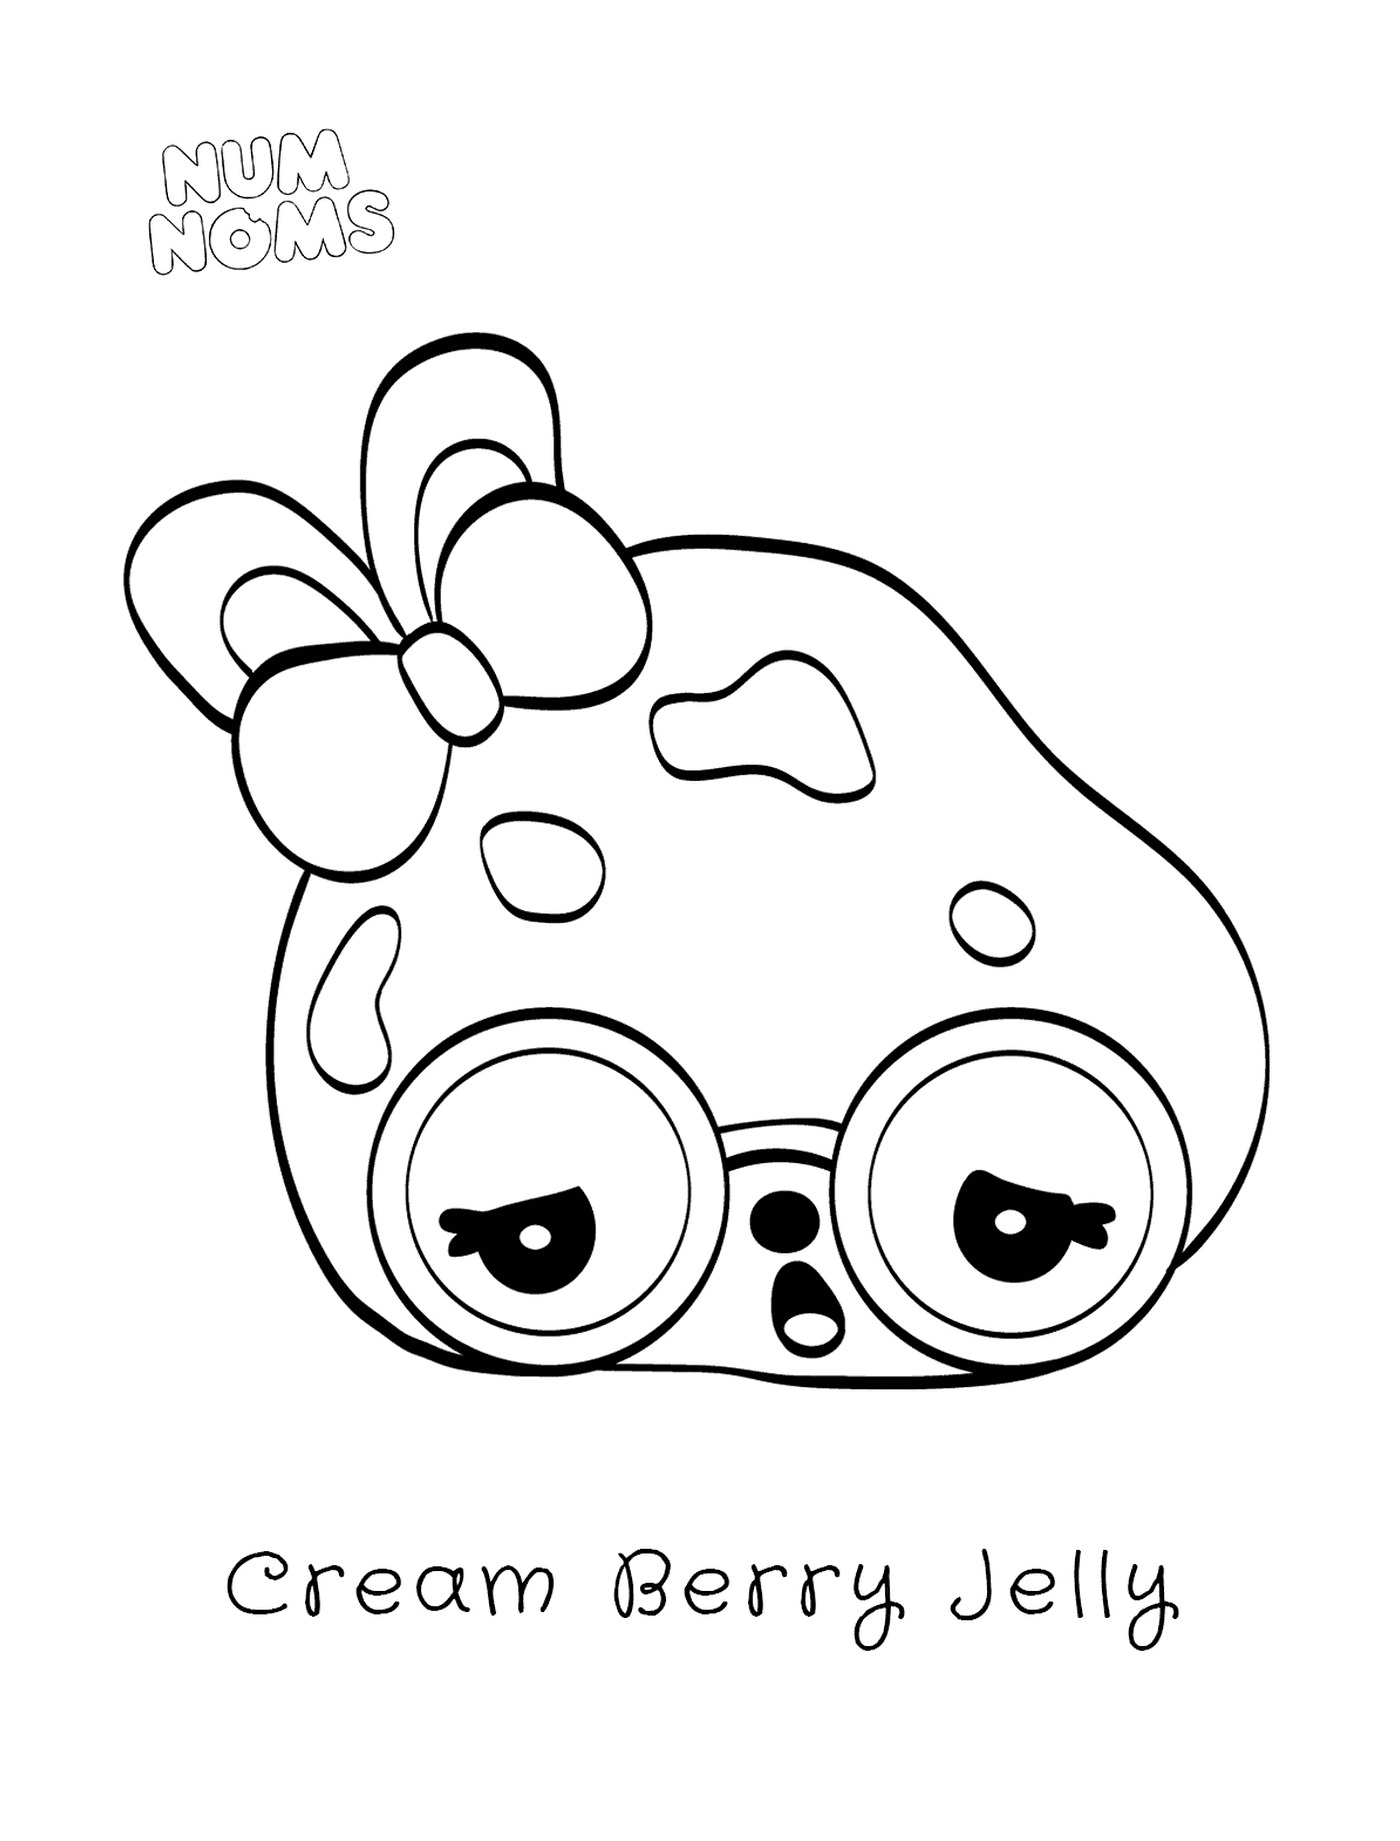 coloriage Num Noms Cream Berry Jelly